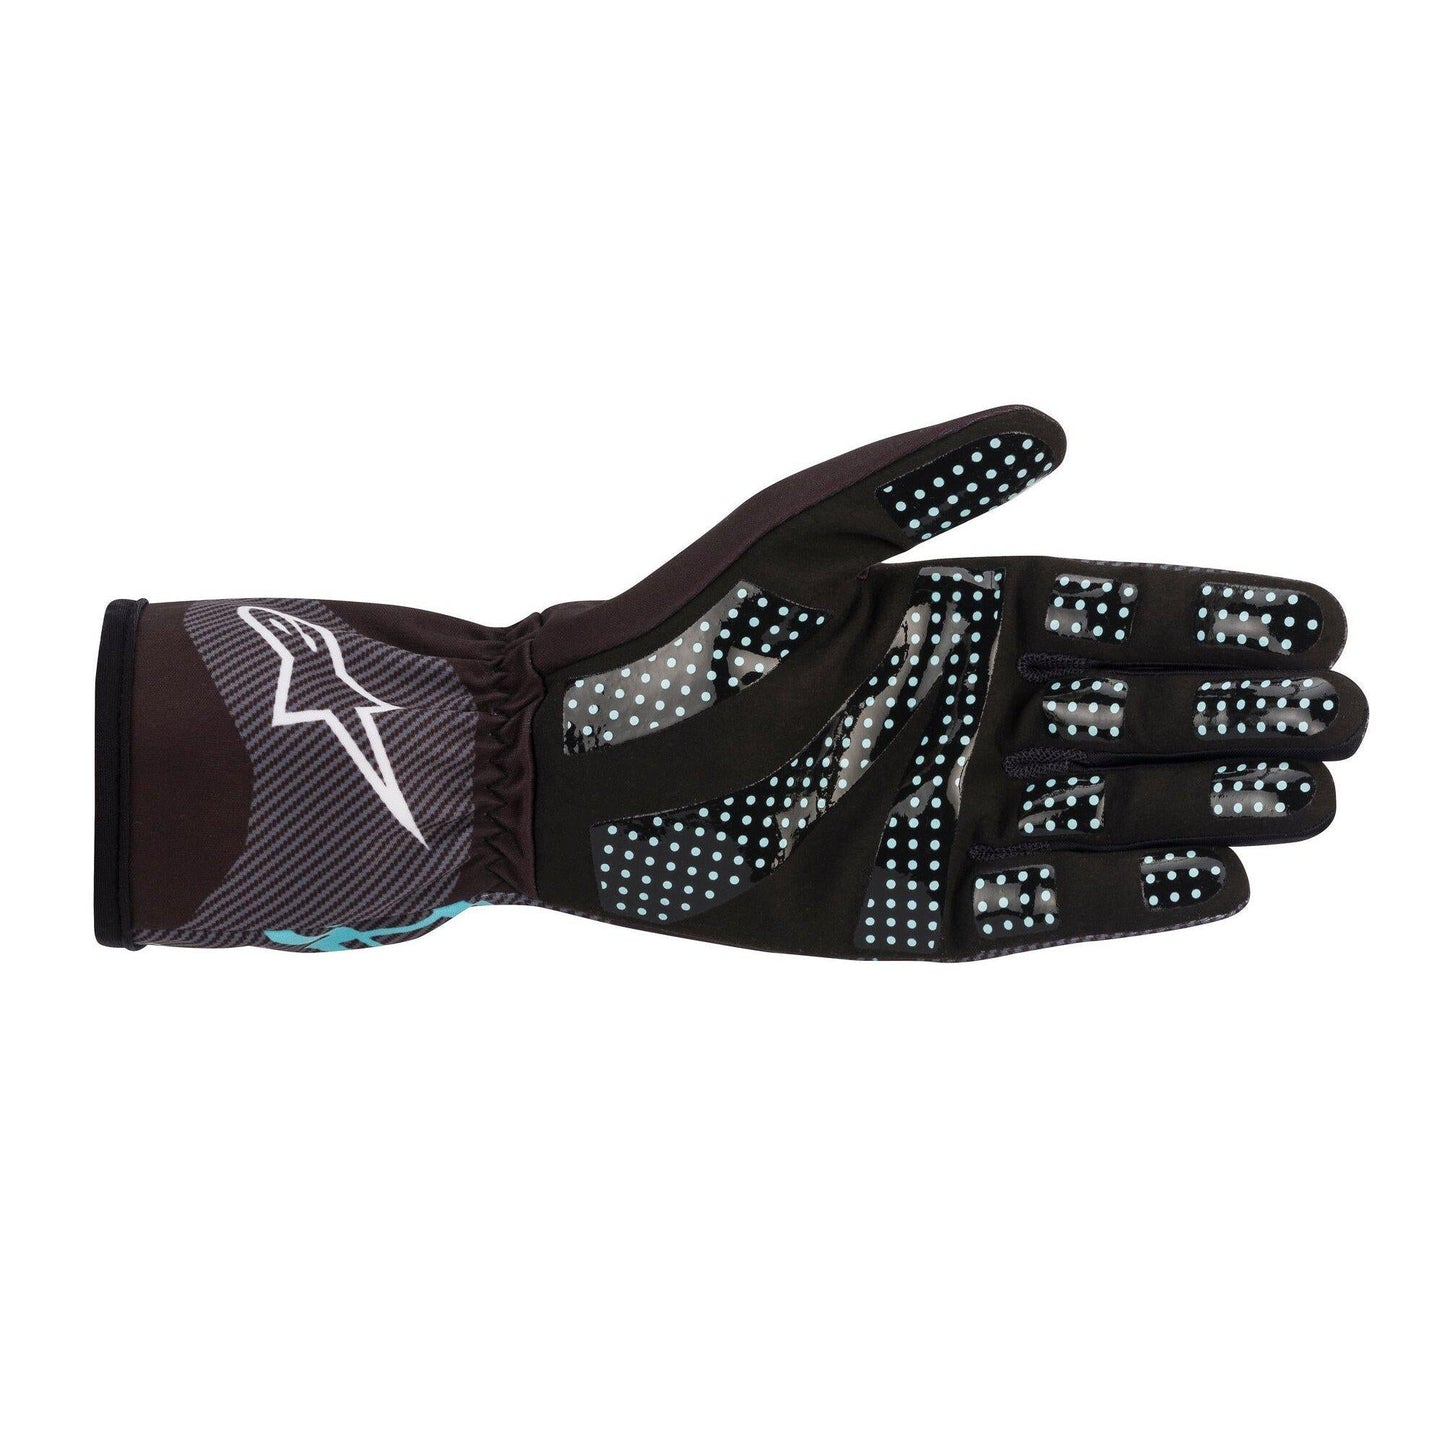 Alpinestars Tech-1 K Race V2 Carbon Gloves